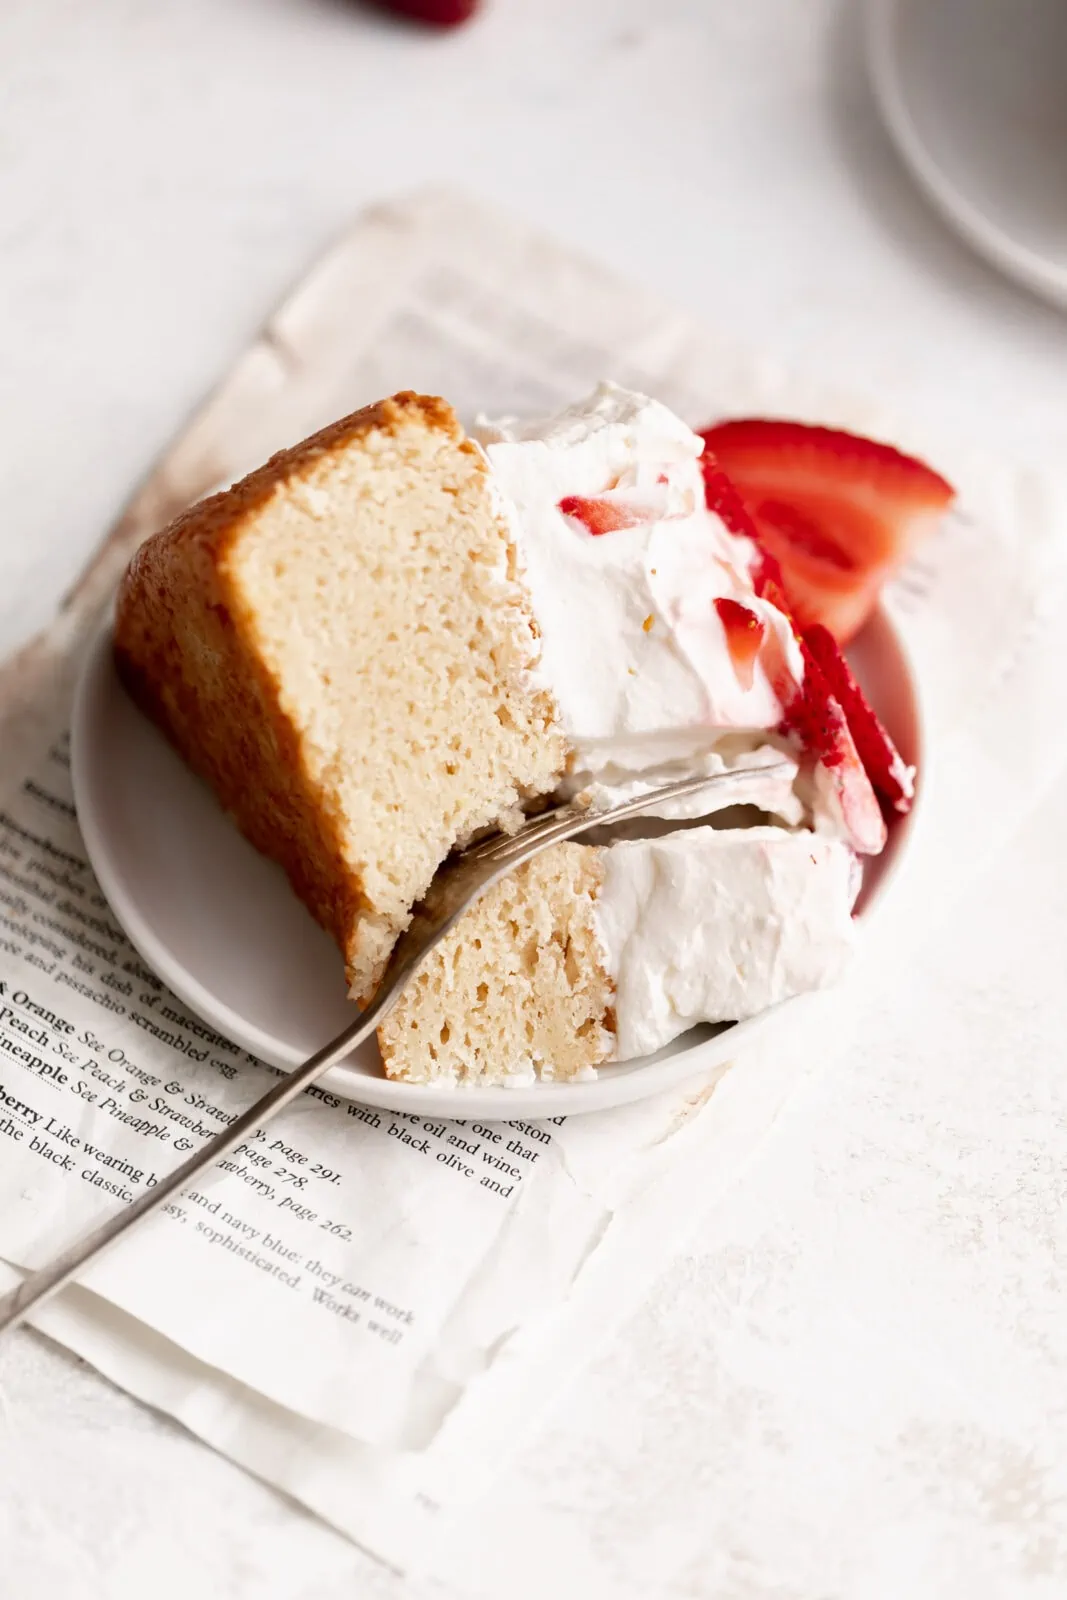 strawberry shortcake cake slice with whipped cream